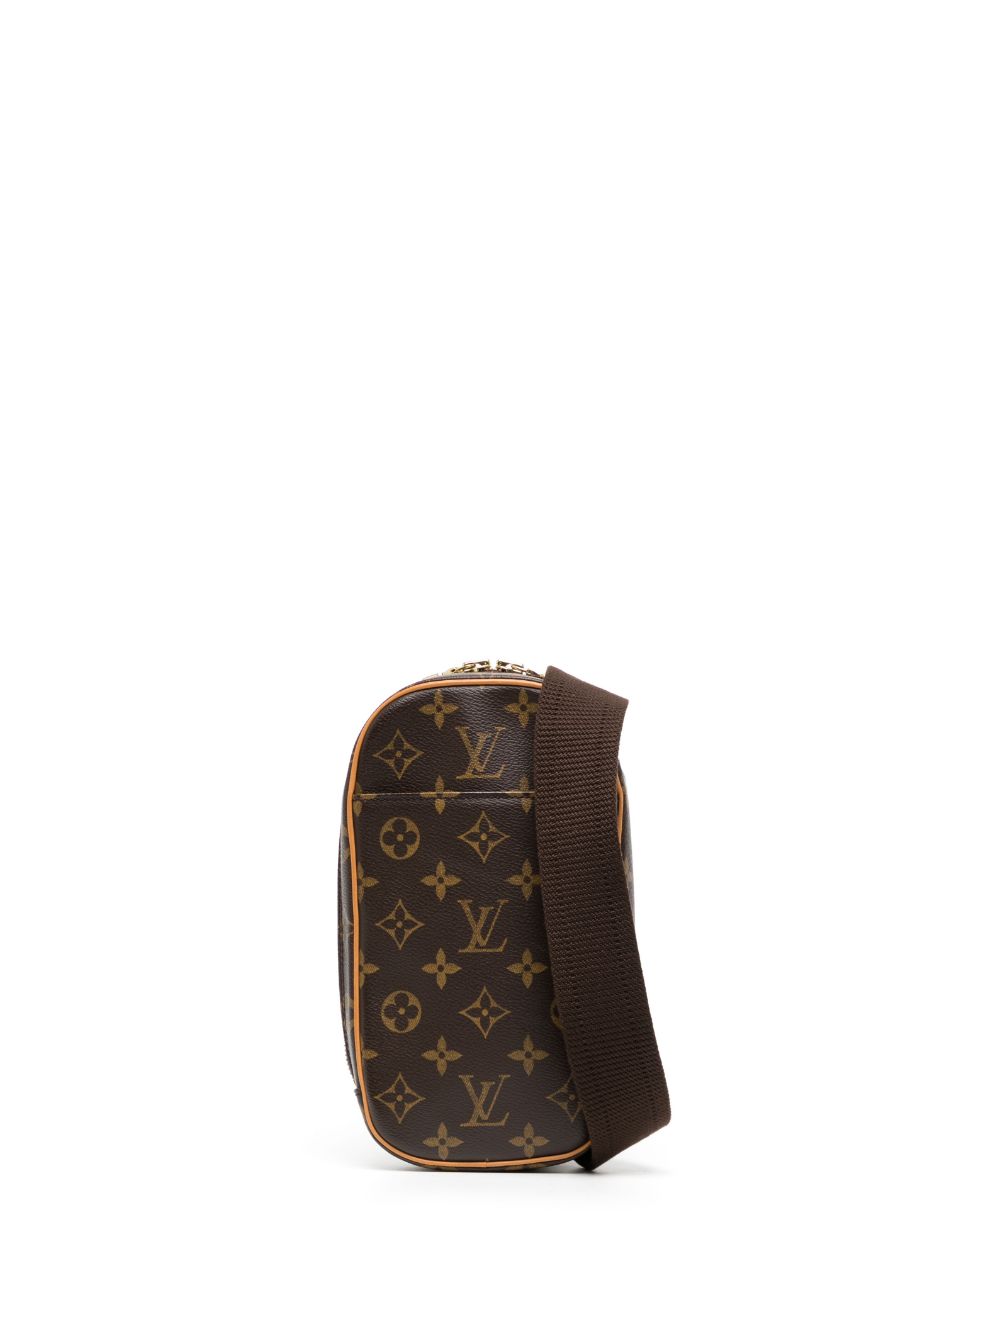 Louis Vuitton 2003 Pre-owned Monogram Crossbody Bag - Brown